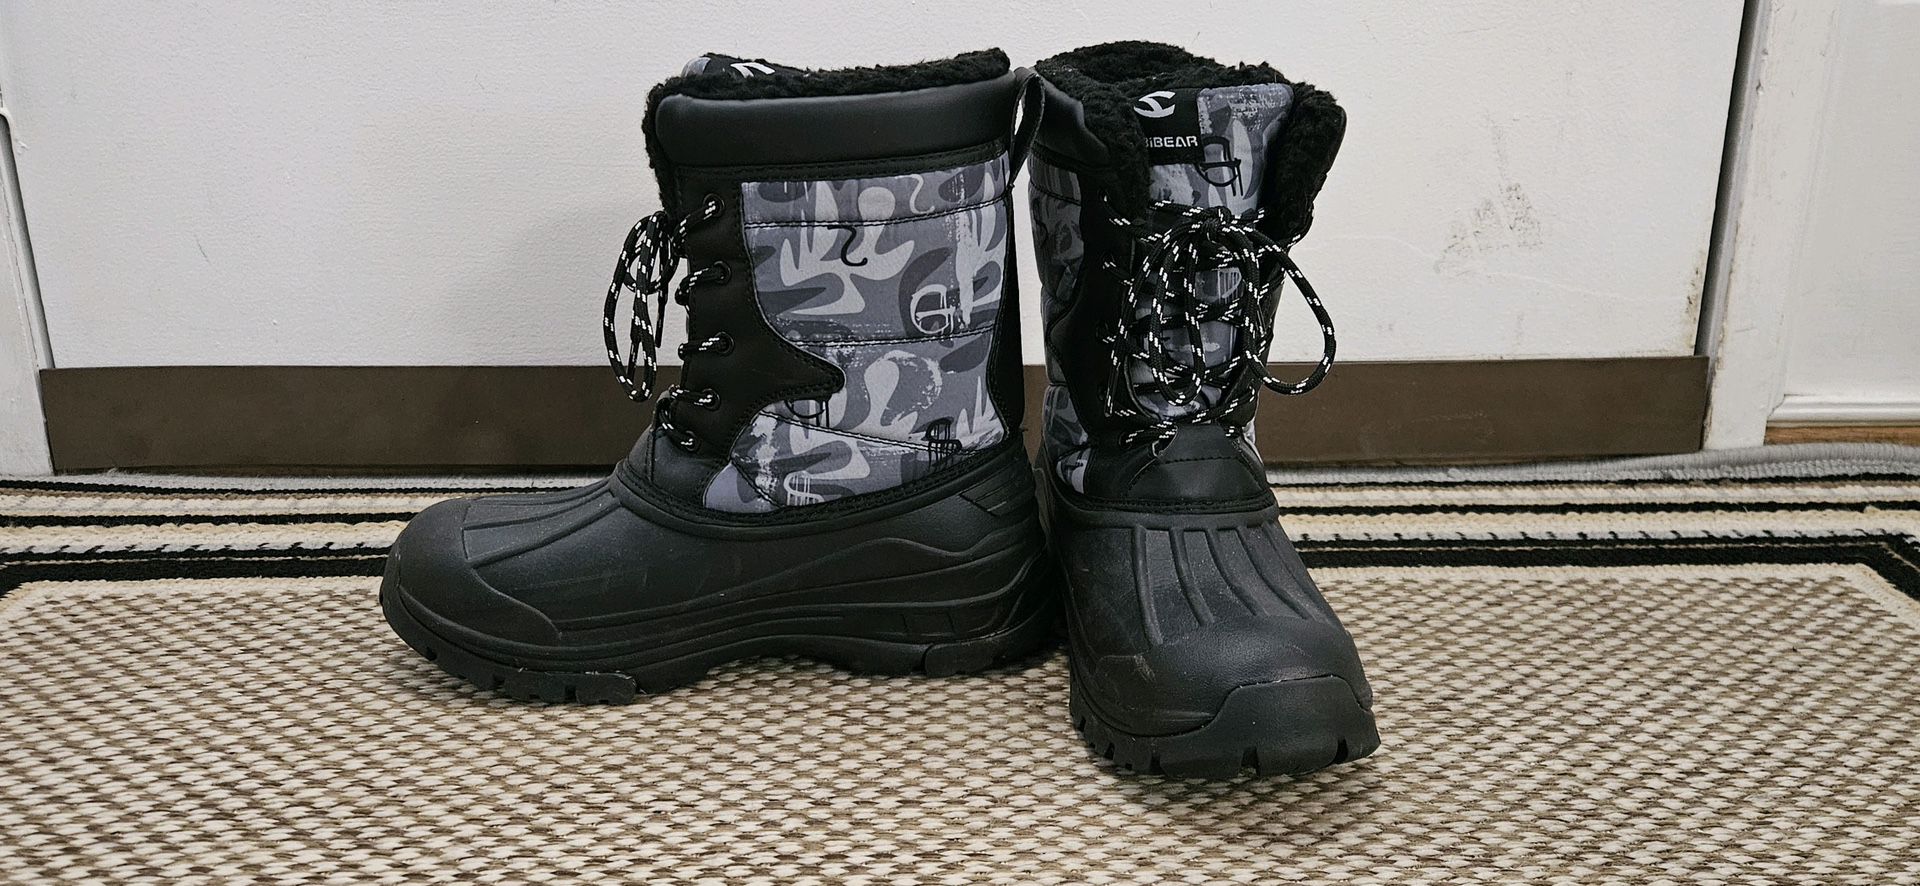 Men’s HobiBear Winter Boots Size 7